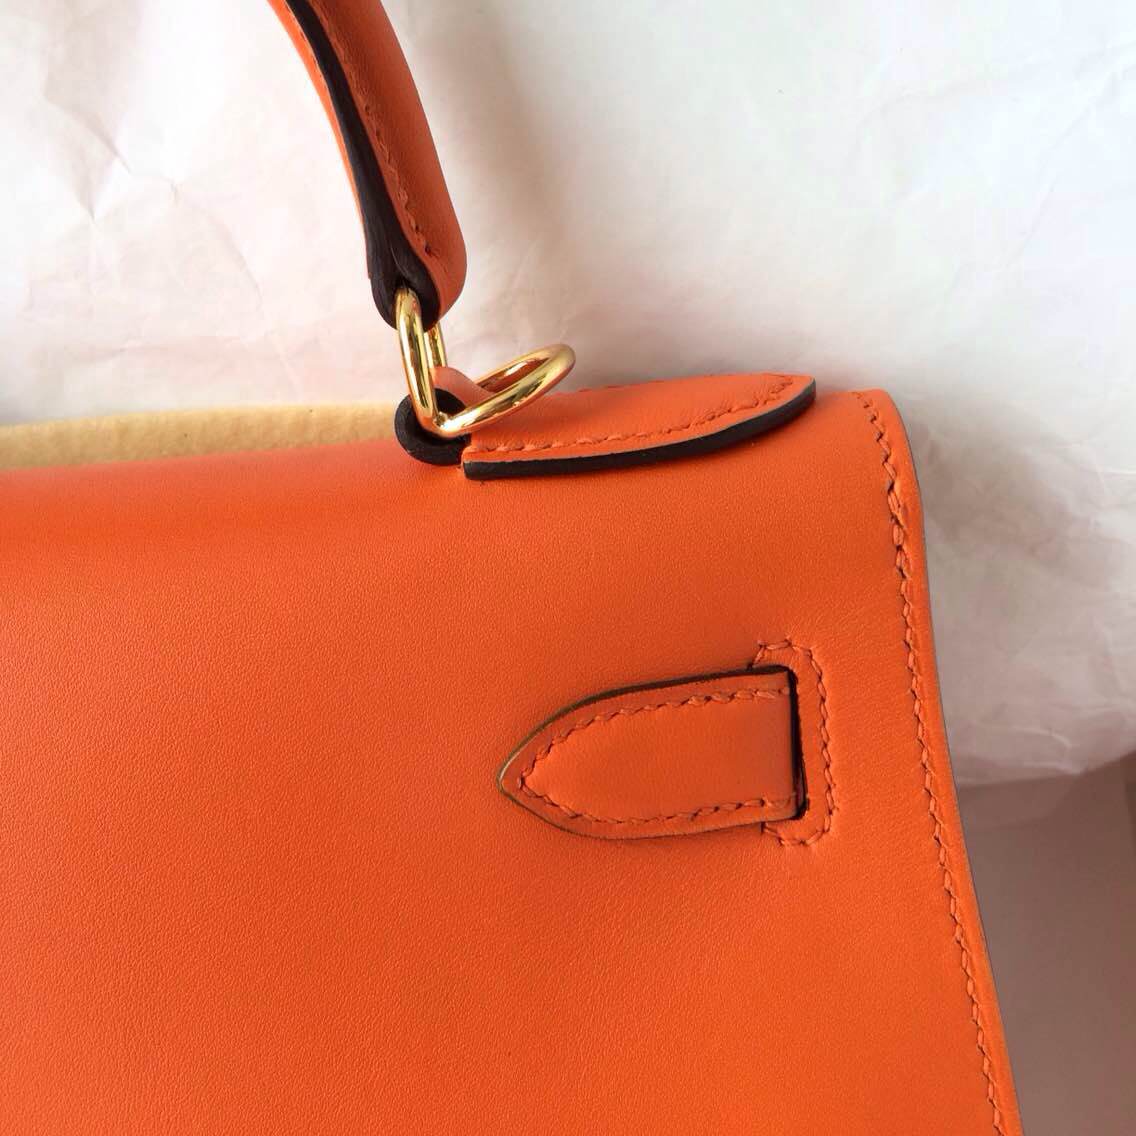 New Pretty C93 Orange Box Calf Leather Hermes Kelly Bag Sellier Gold Hardware